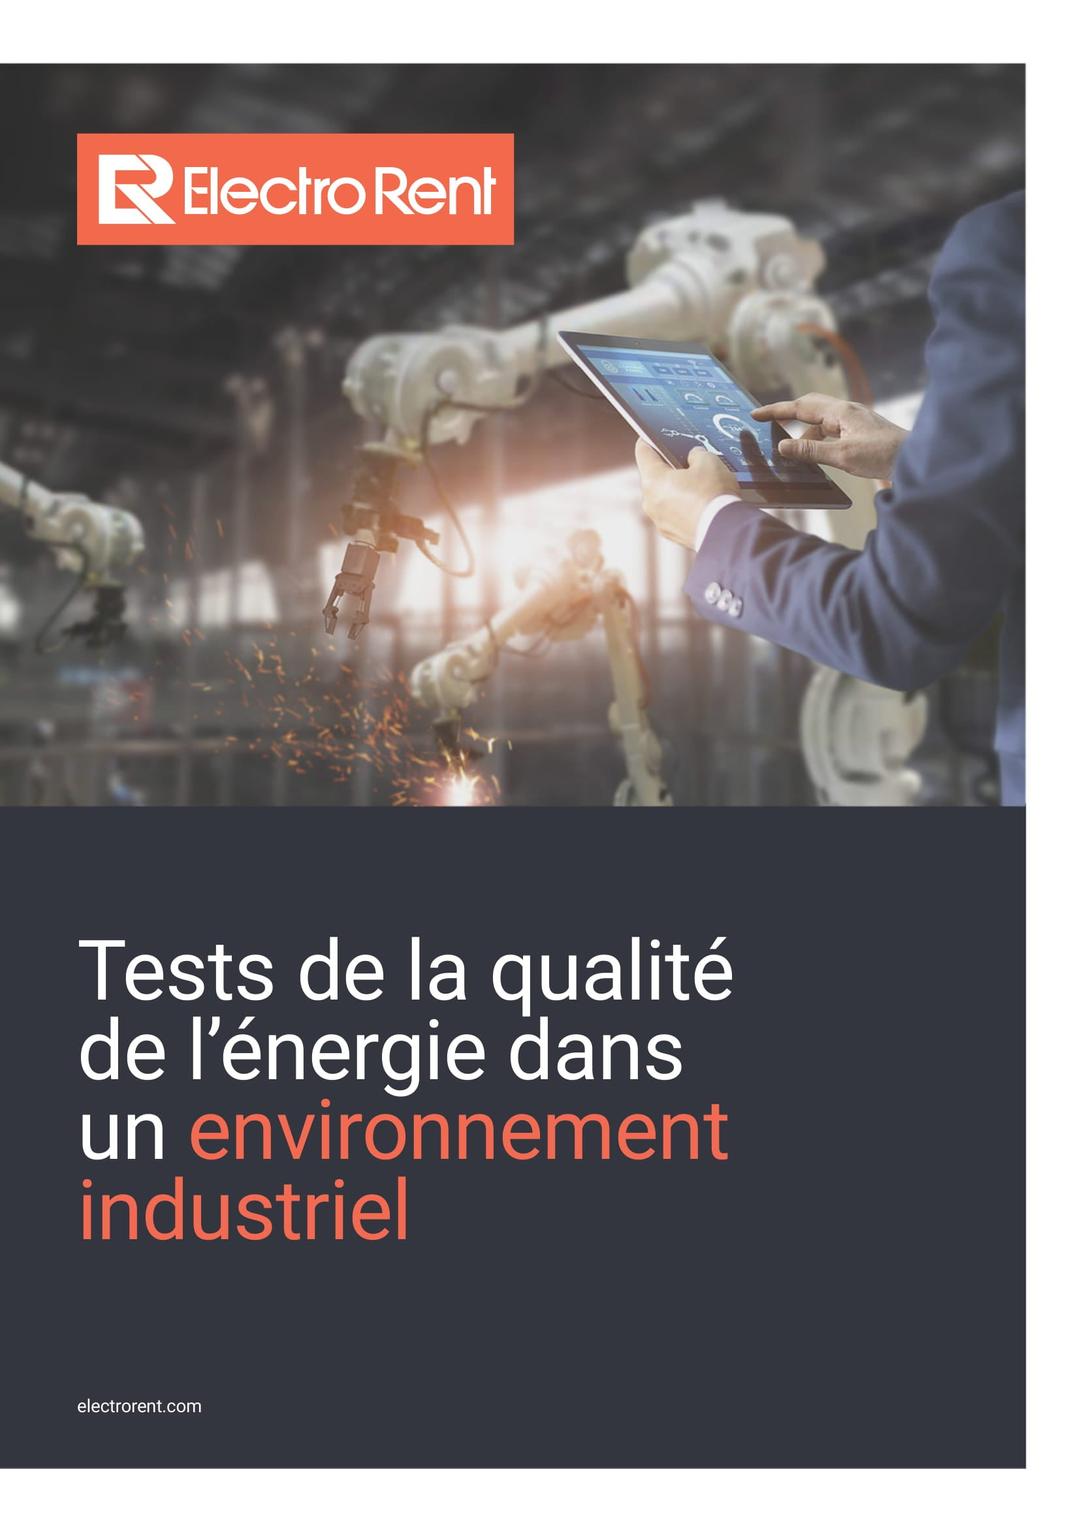 EU FR Industrial WP, image